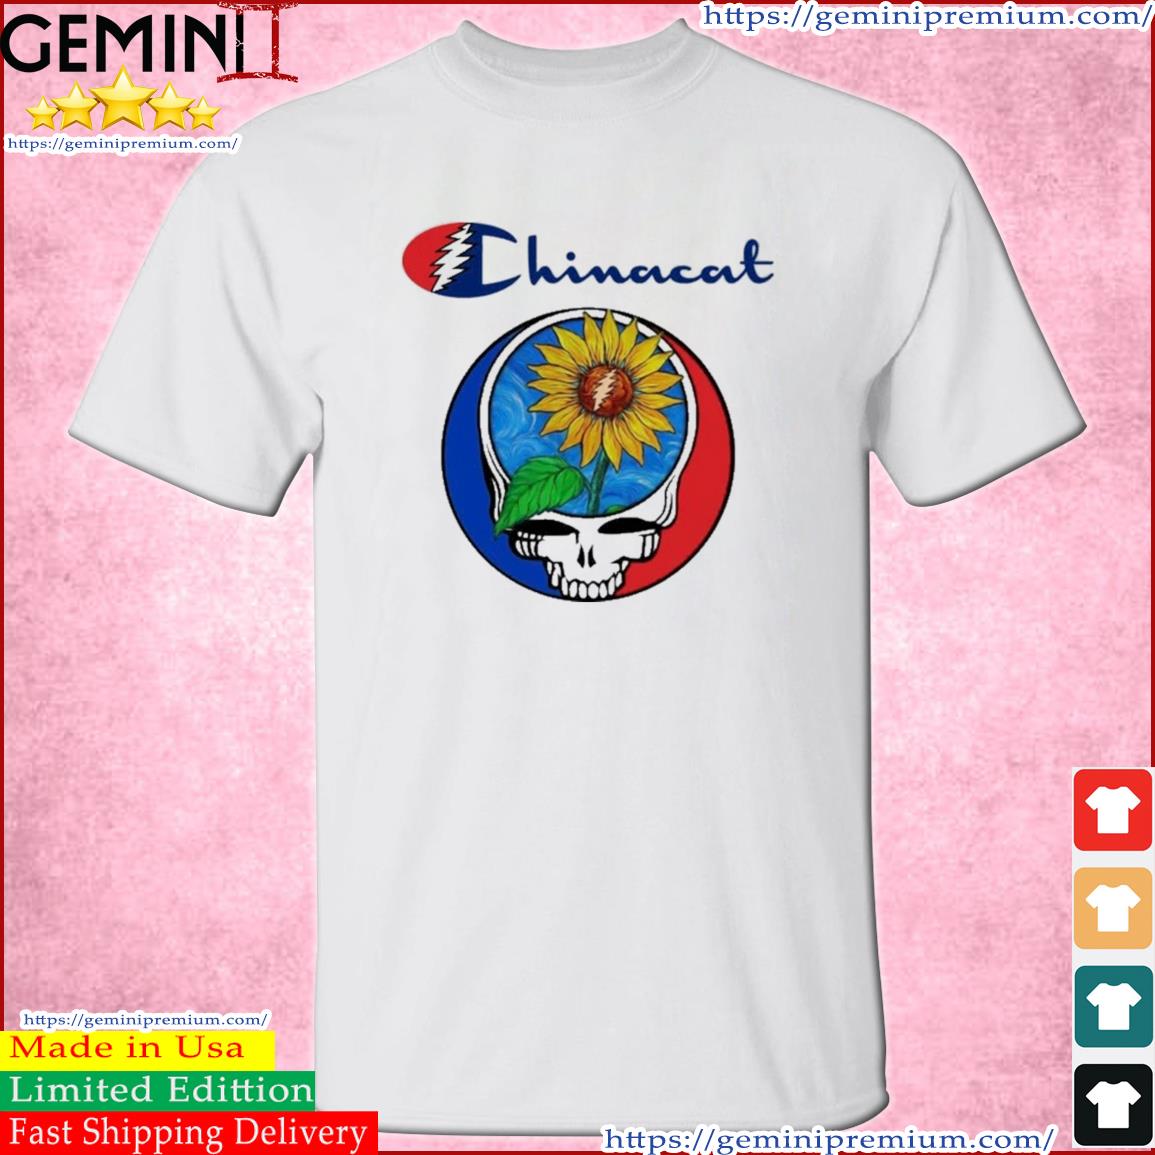 Chinacat Grateful Dead Logo Shirt